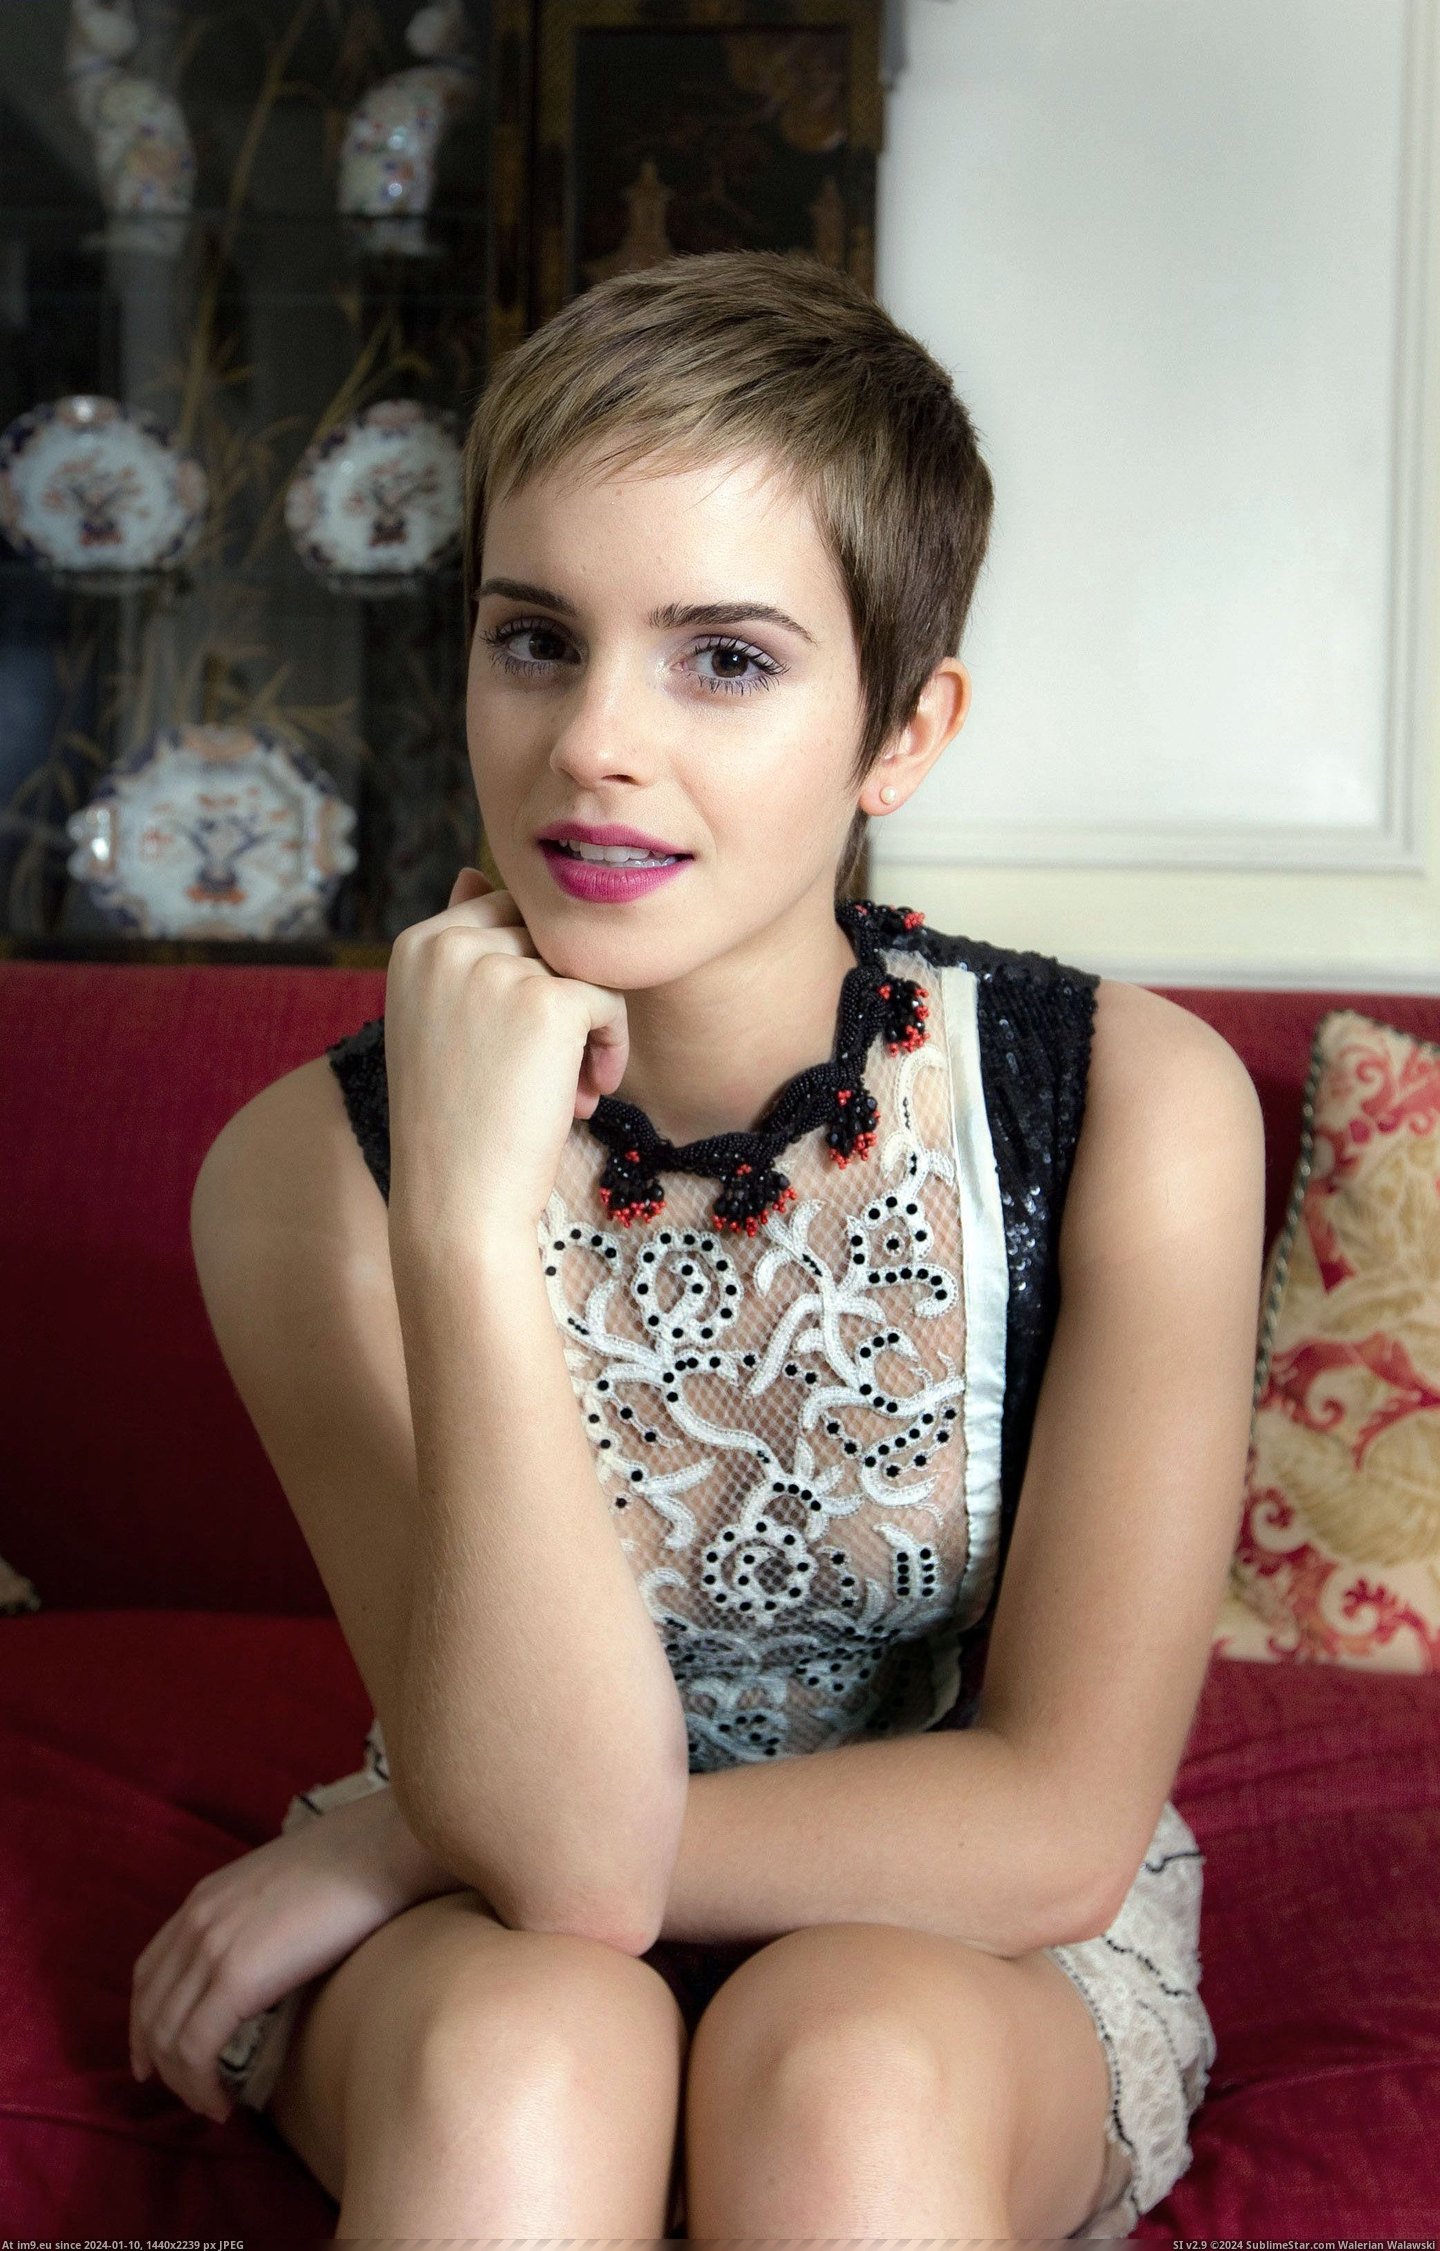 #Photo #Emma #Nip #Owgjxj2 #Watson #Slip Emma Watson Nip Slip Owgjxj2 (emma photo) Pic. (Изображение из альбом Emma Watson Photos))